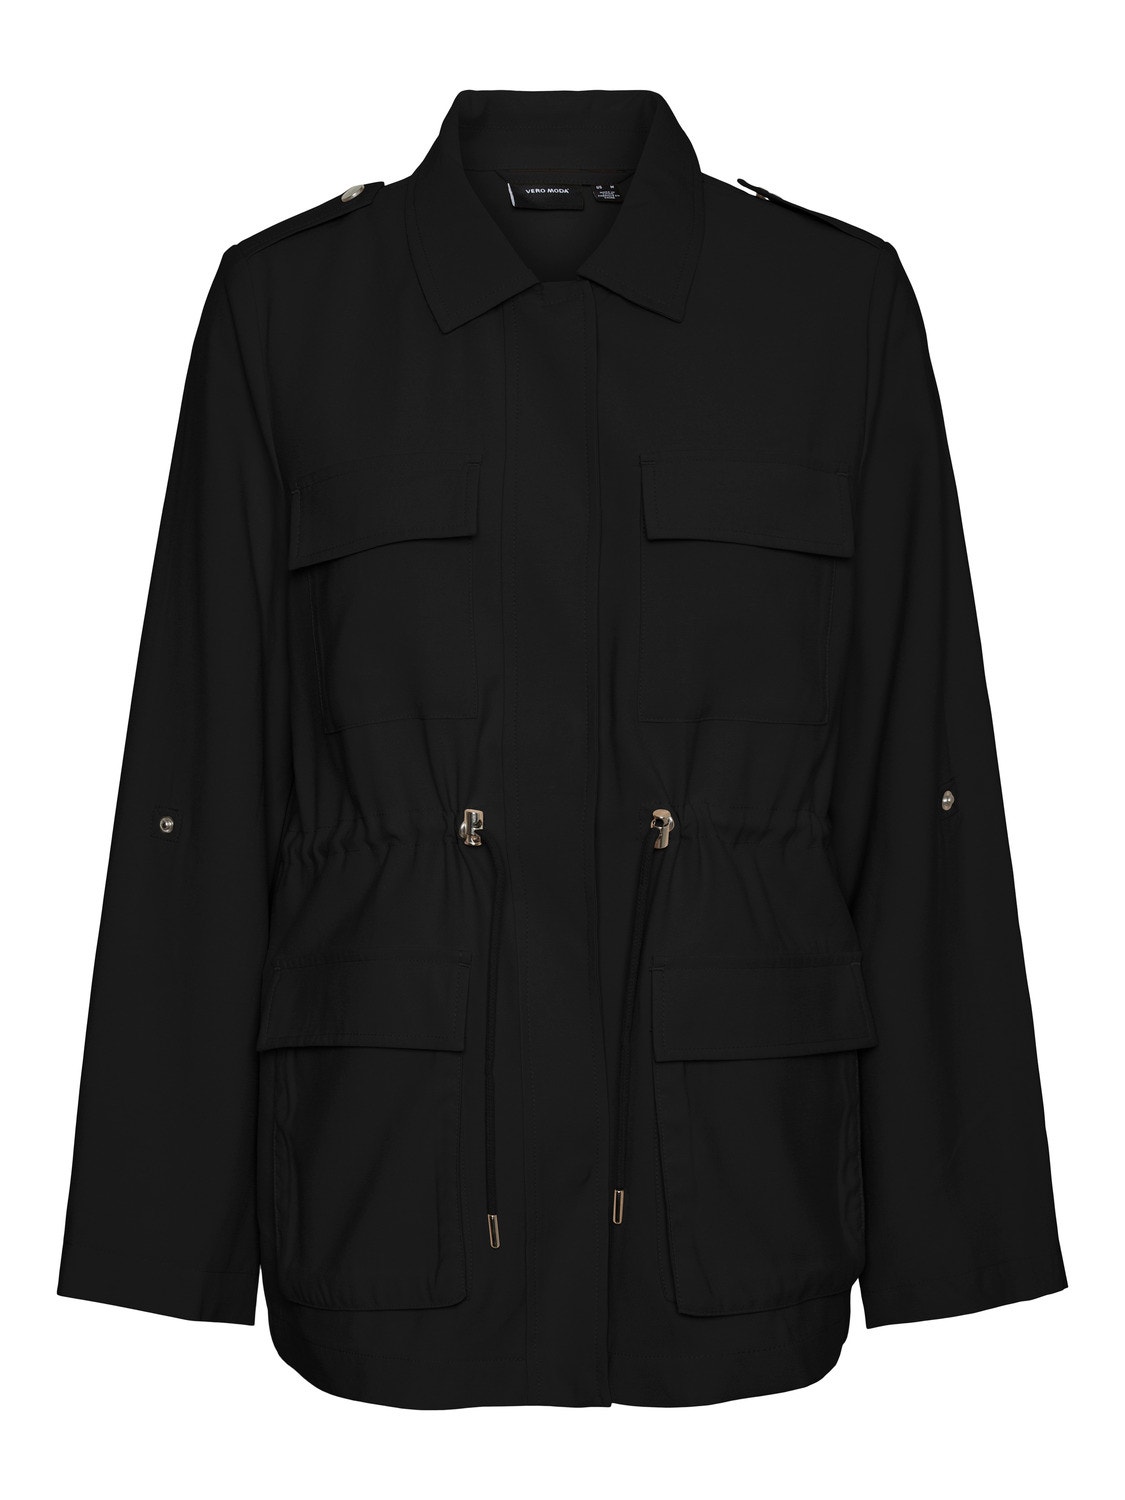 Vero Moda VMJAZZ Jacket -Black - 10307302